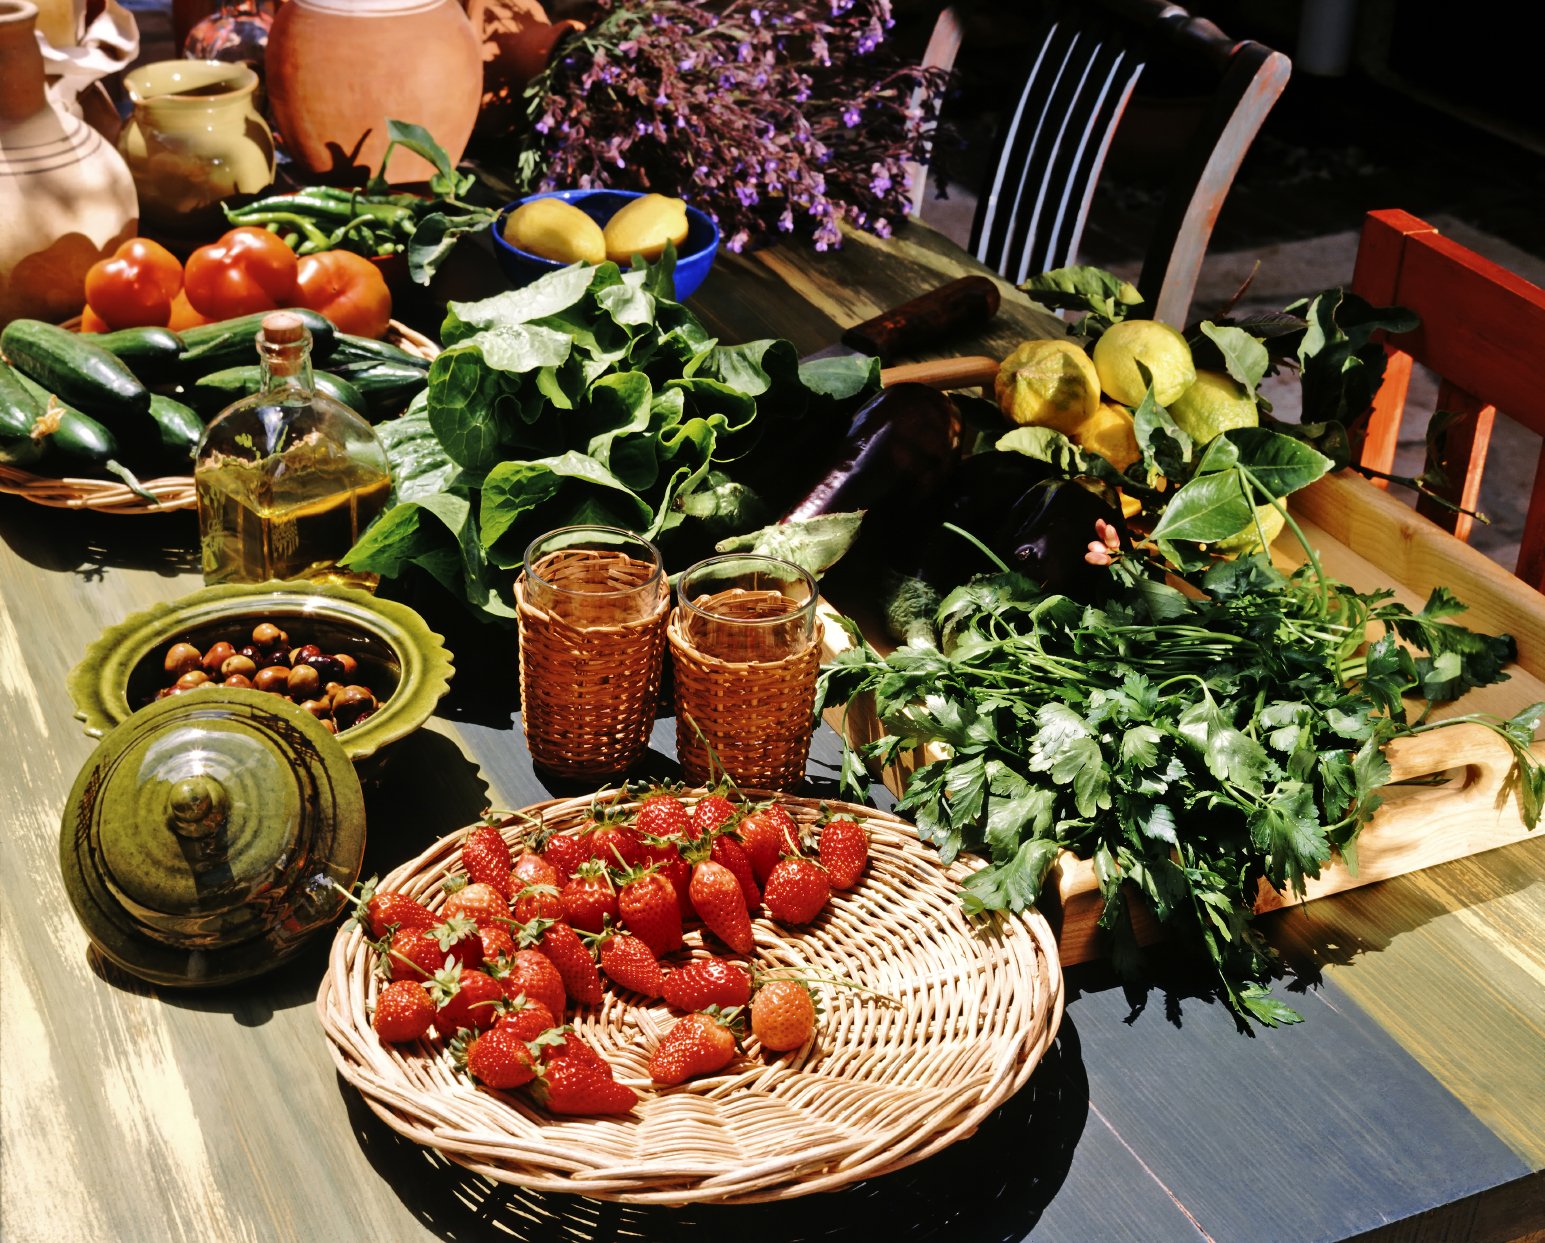 Mediterranean still life with healthy food ingredients